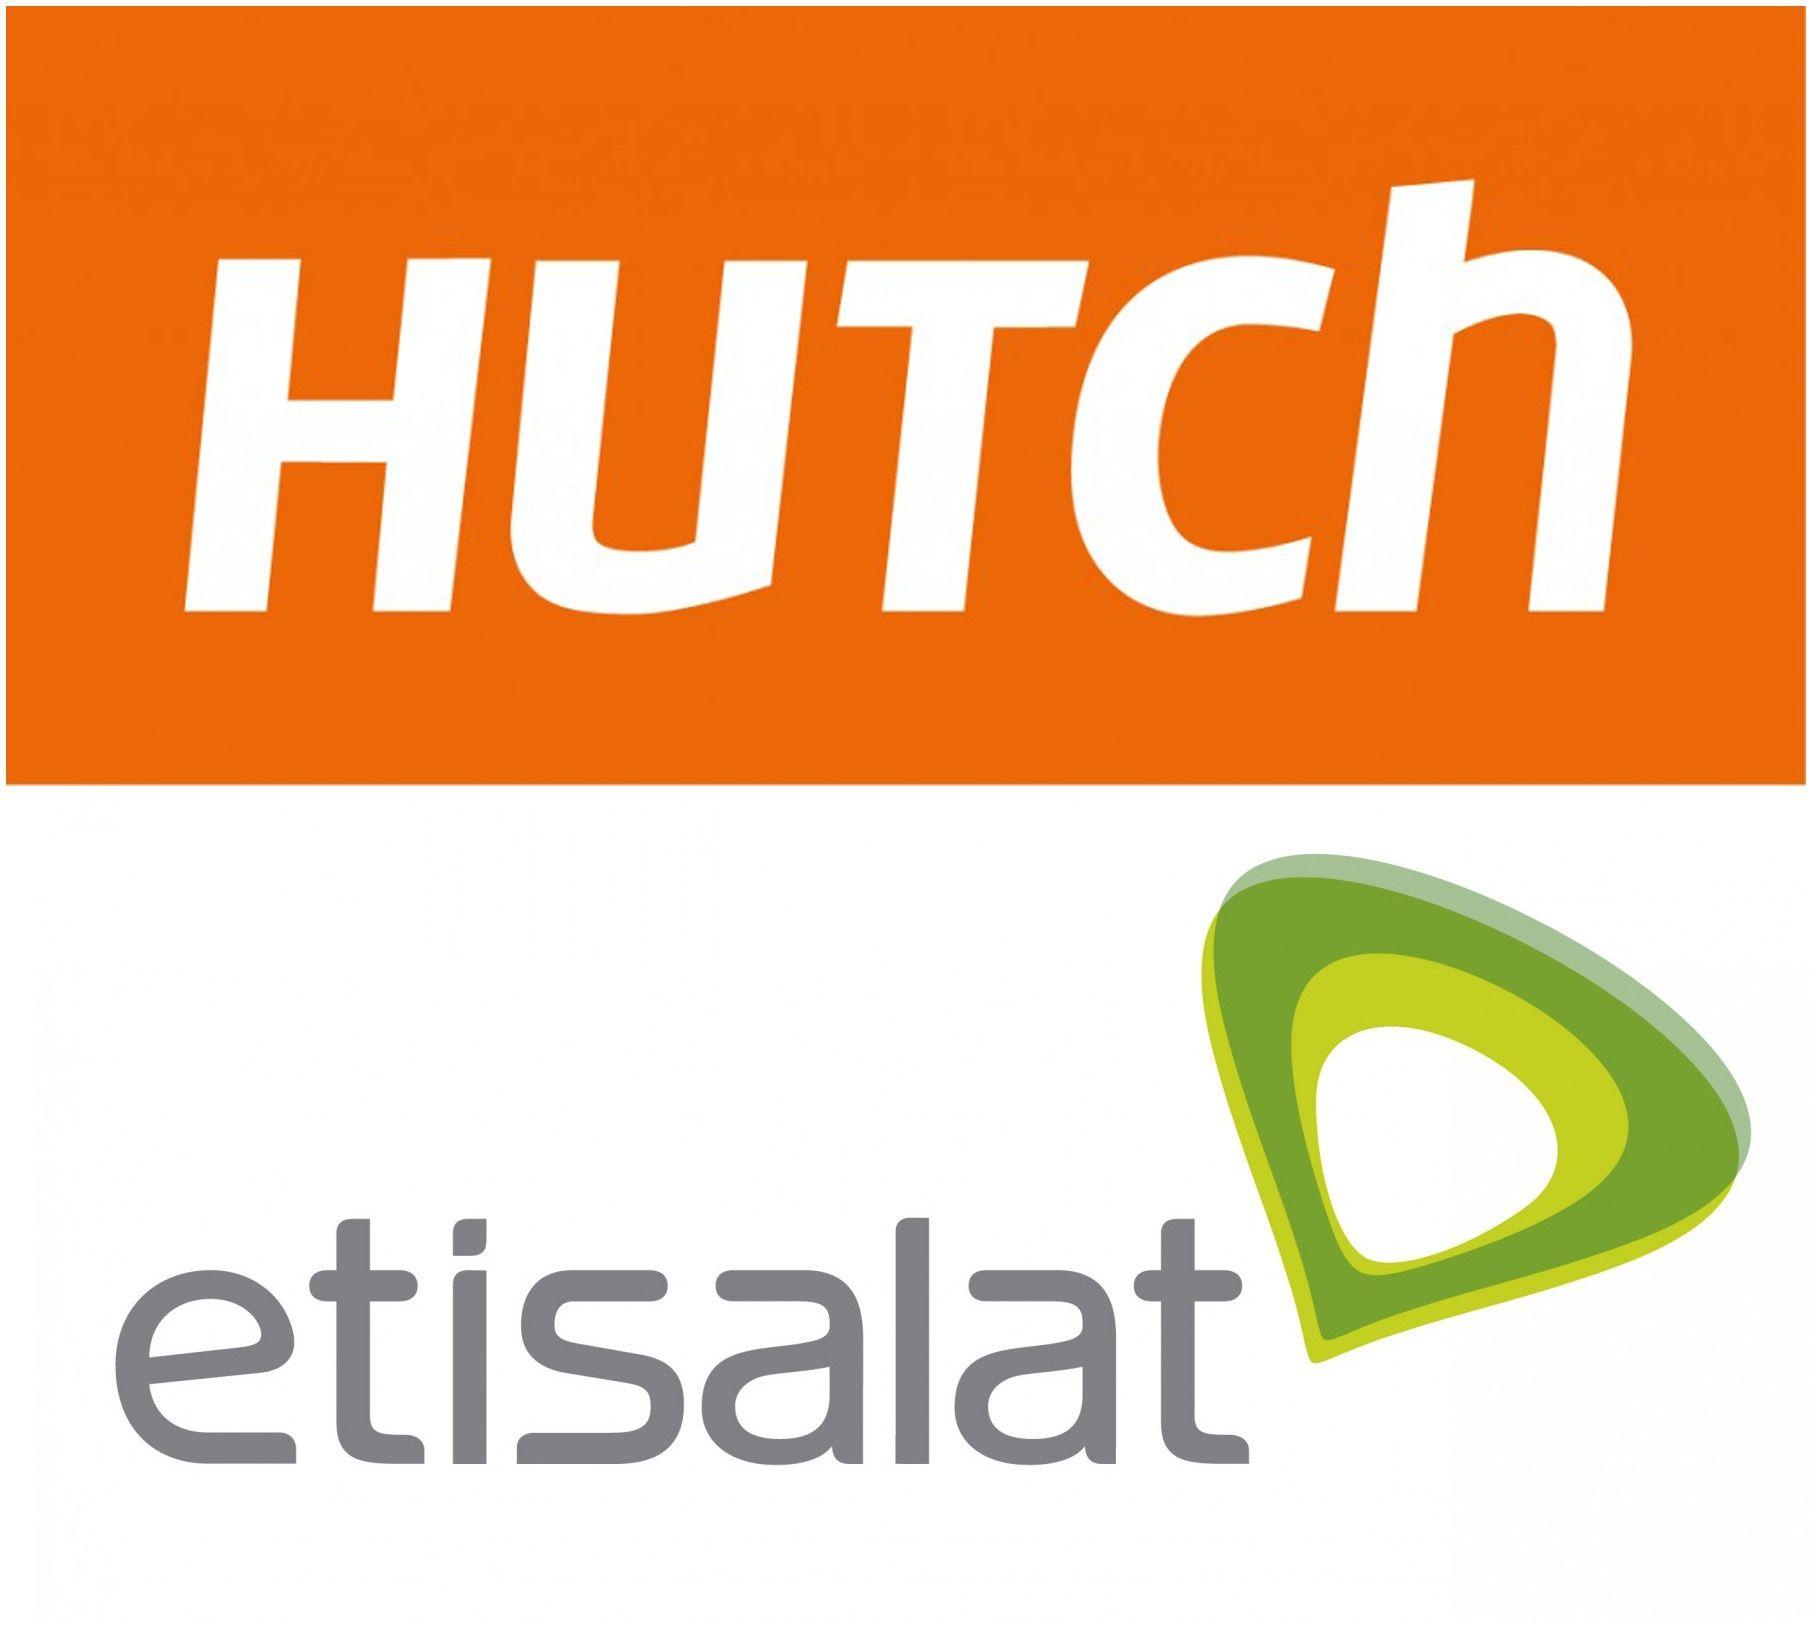 Hutch Logo - Hutch-Eti Logo-EPS-1024×444 | Hutchison Telecommunications Sri Lanka ...